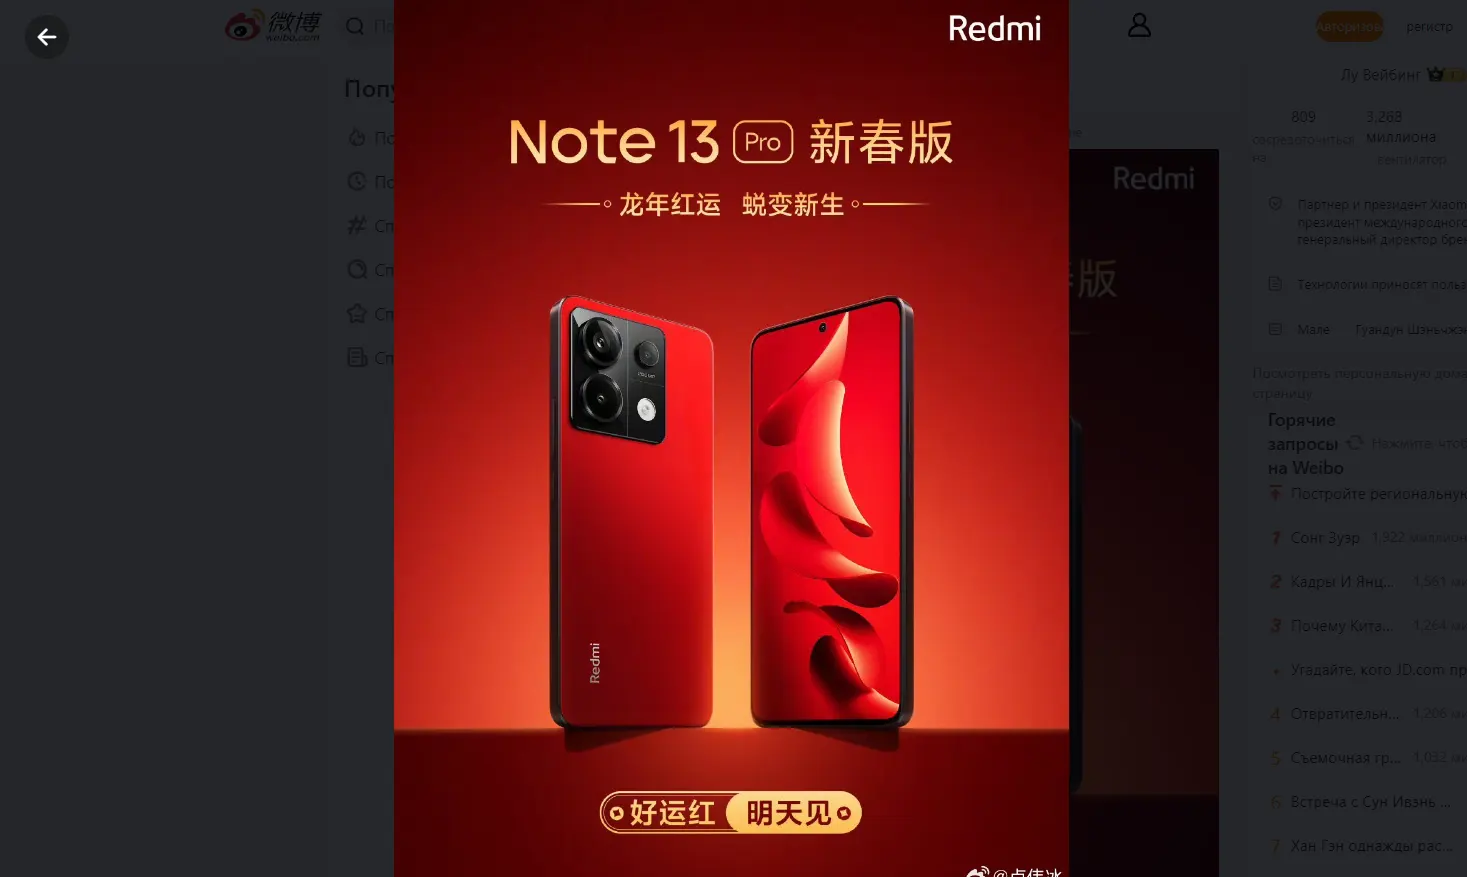 Redmi представил коллекционную версию Note 13 Pro